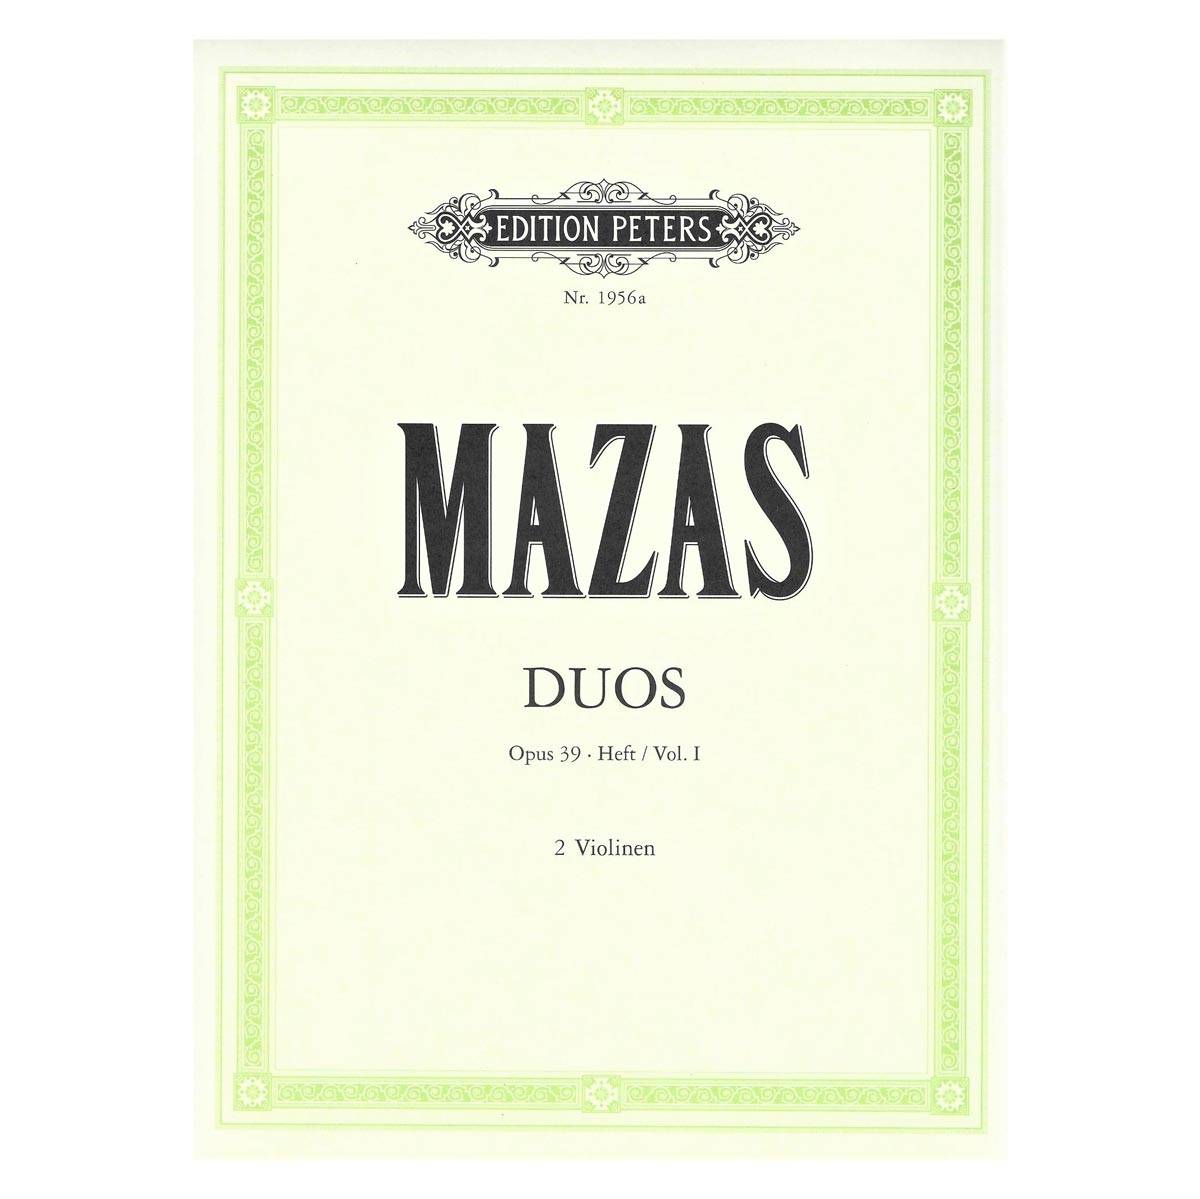 Mazas - Duos Opus 39 Vol.1